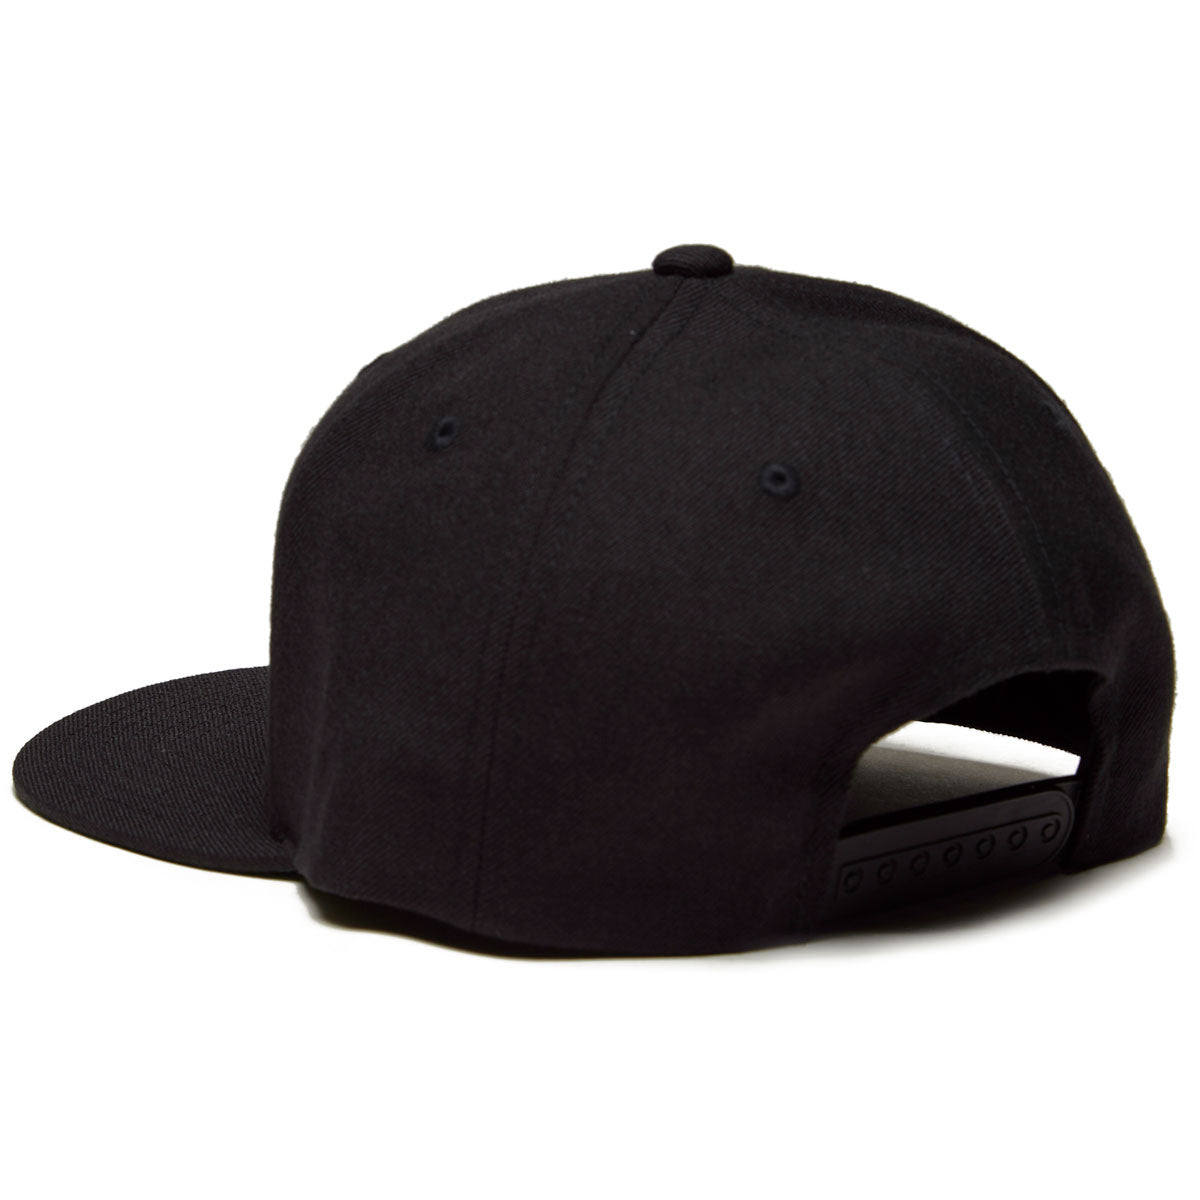 RVCA Twill Snapback II Hat - Black/Charcoal image 2